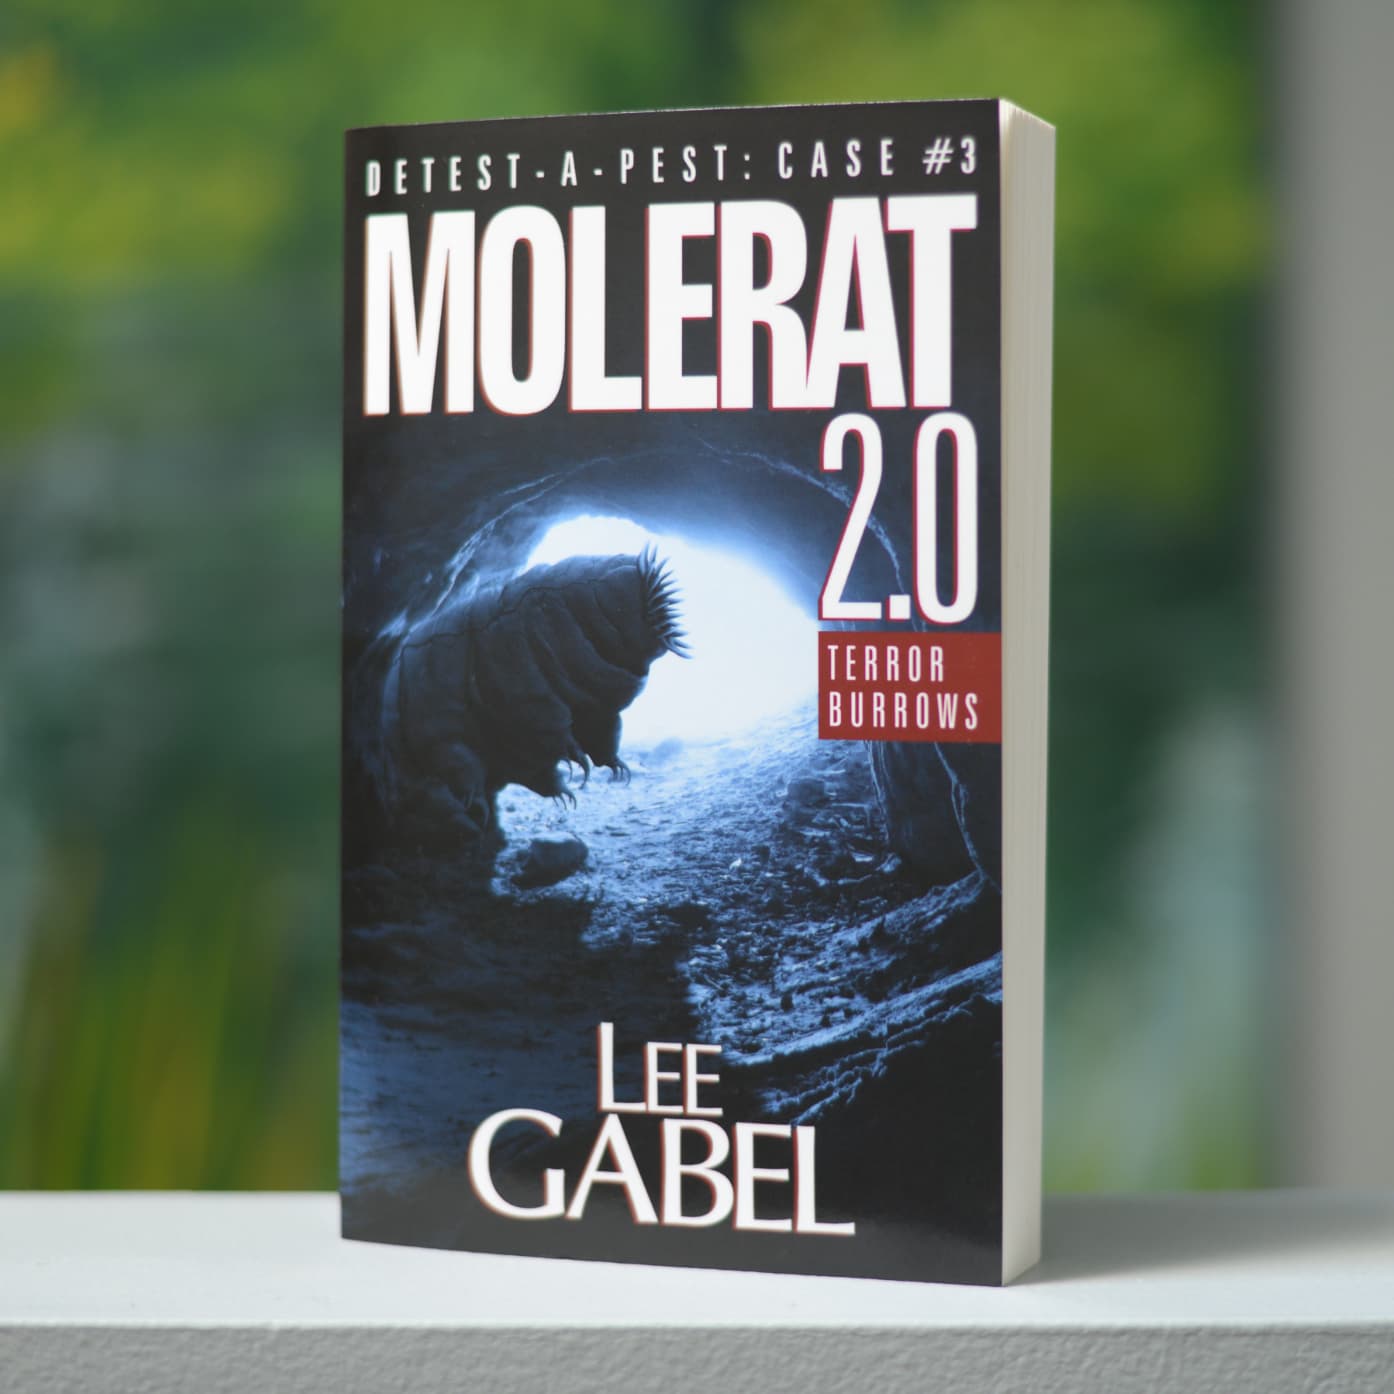 Molerat 2.0 actual paperback image (340 pages.)